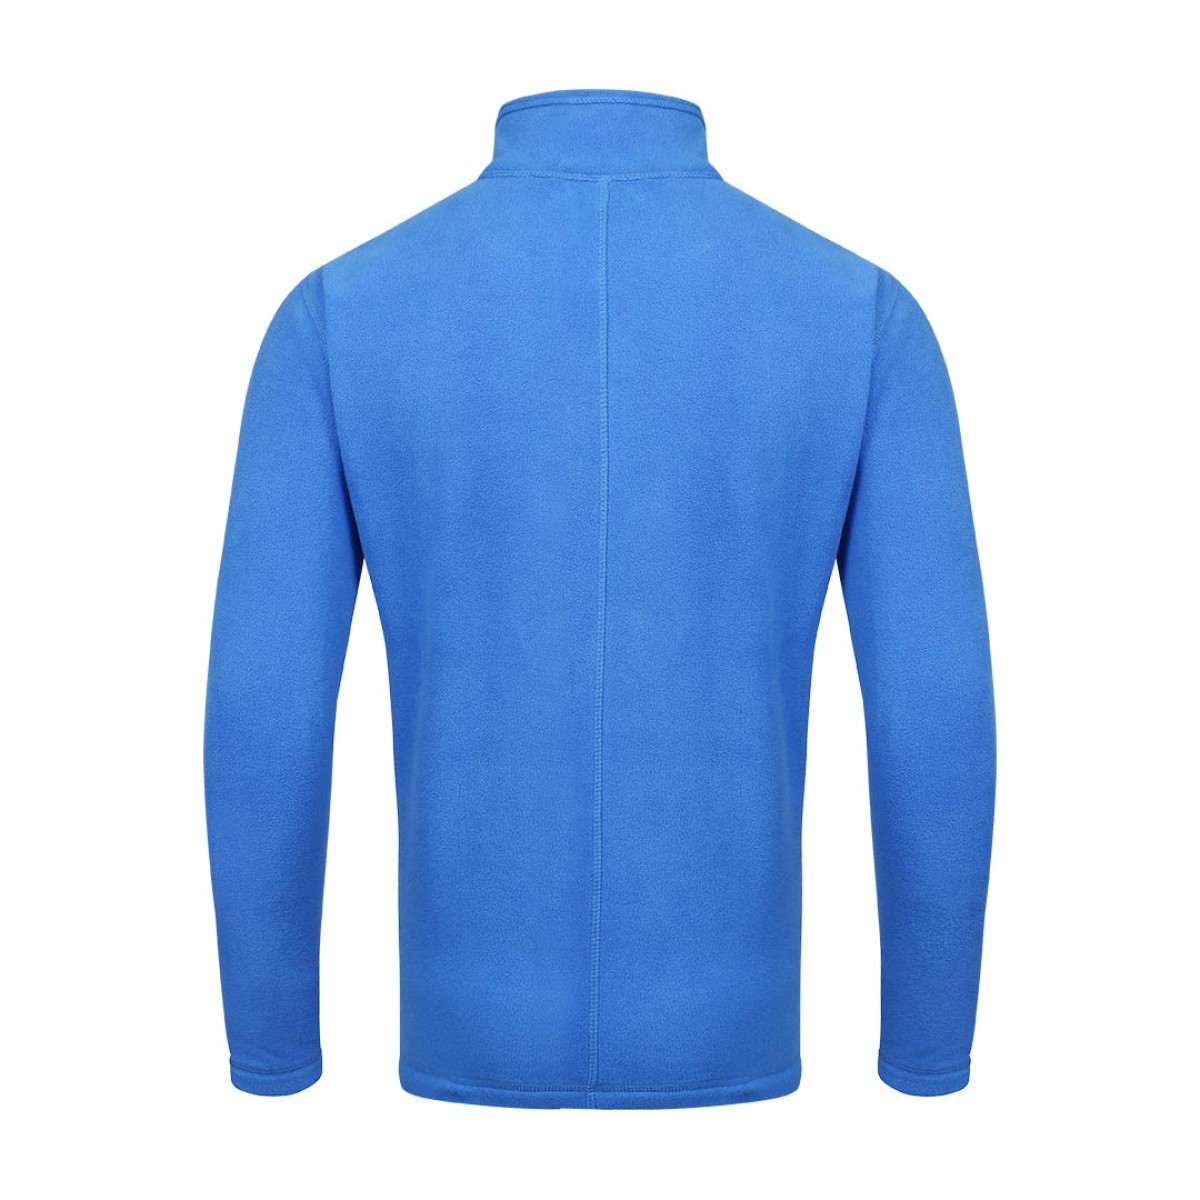 unisex-polar-fleece-jacket-kupfj32301